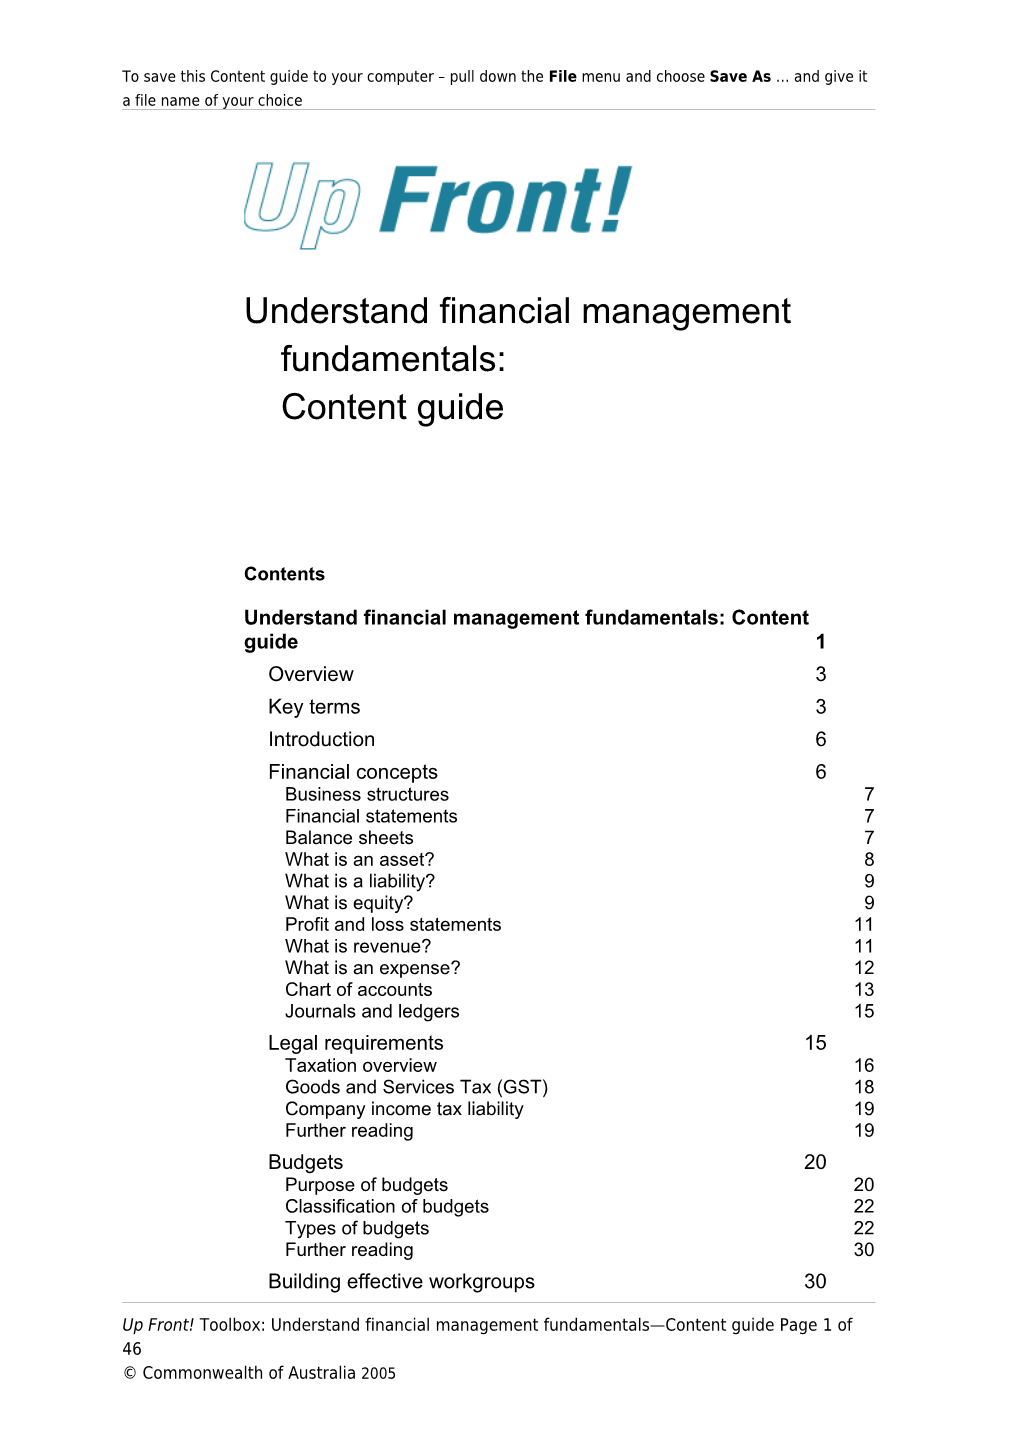 Understand Financial Management Fundamentals:Content Guide